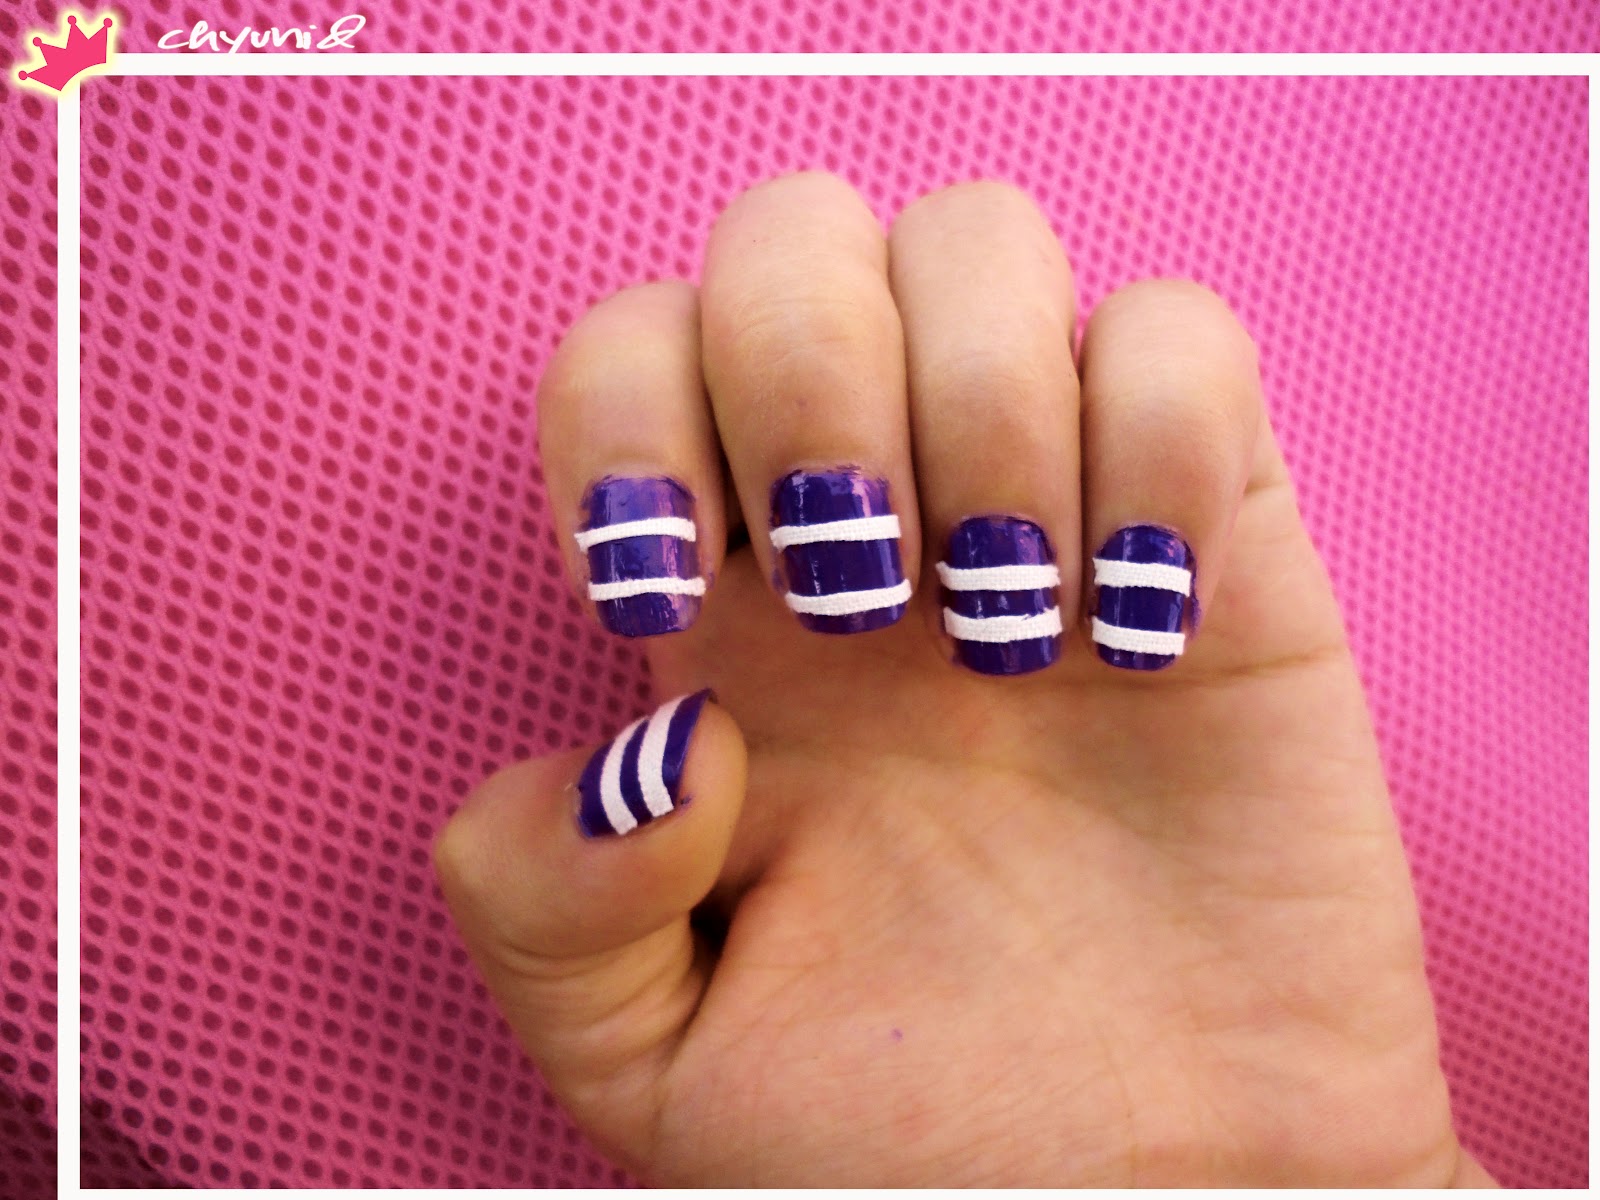 9. "Band-Aid Nail Art: Creative Ways to Use Band-Aids for Nail Art" - wide 6